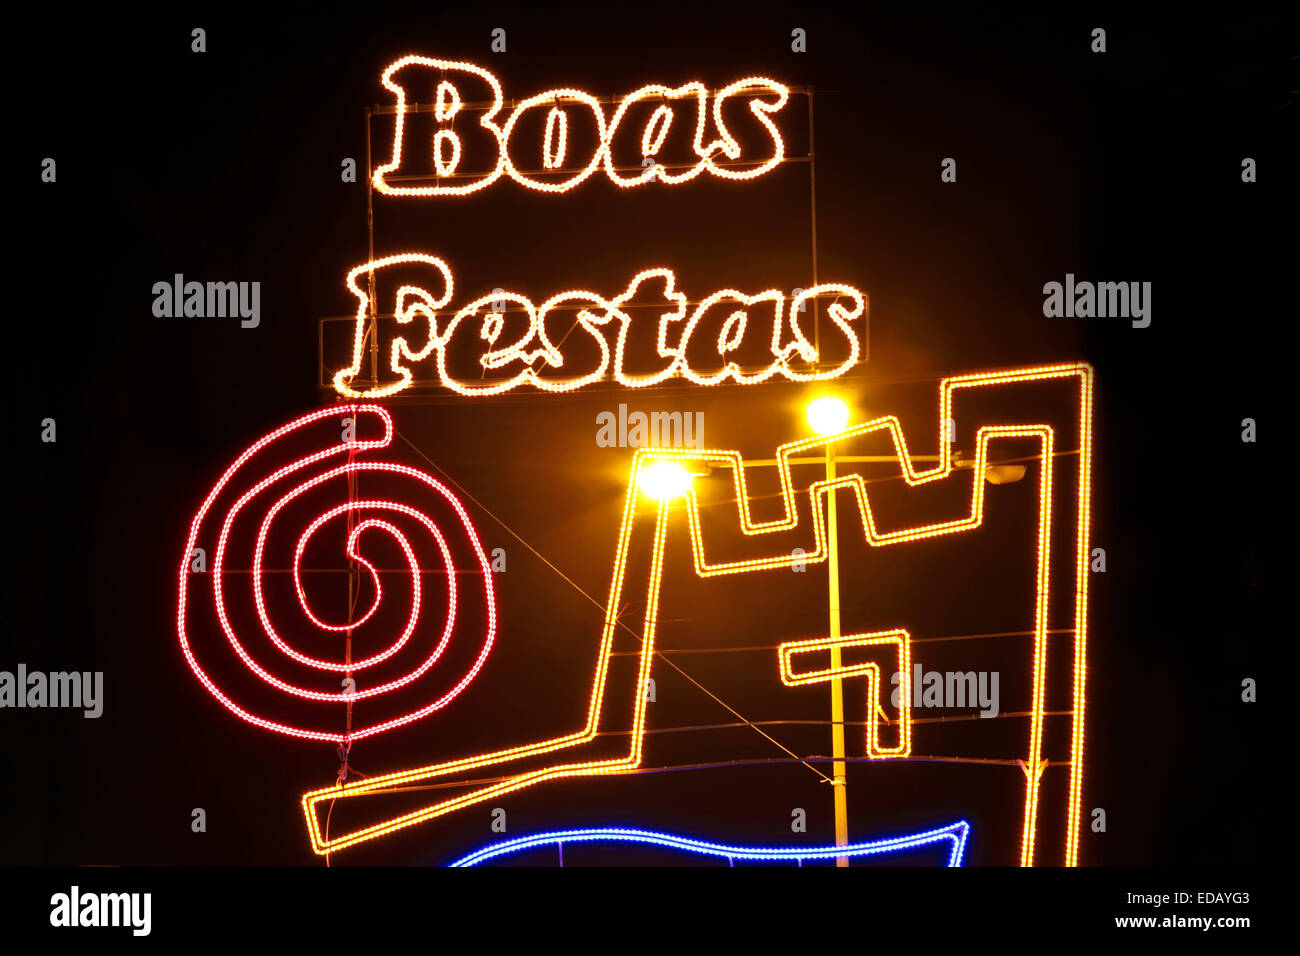 Boas Festas decoration at night in Portugal Stock Photo